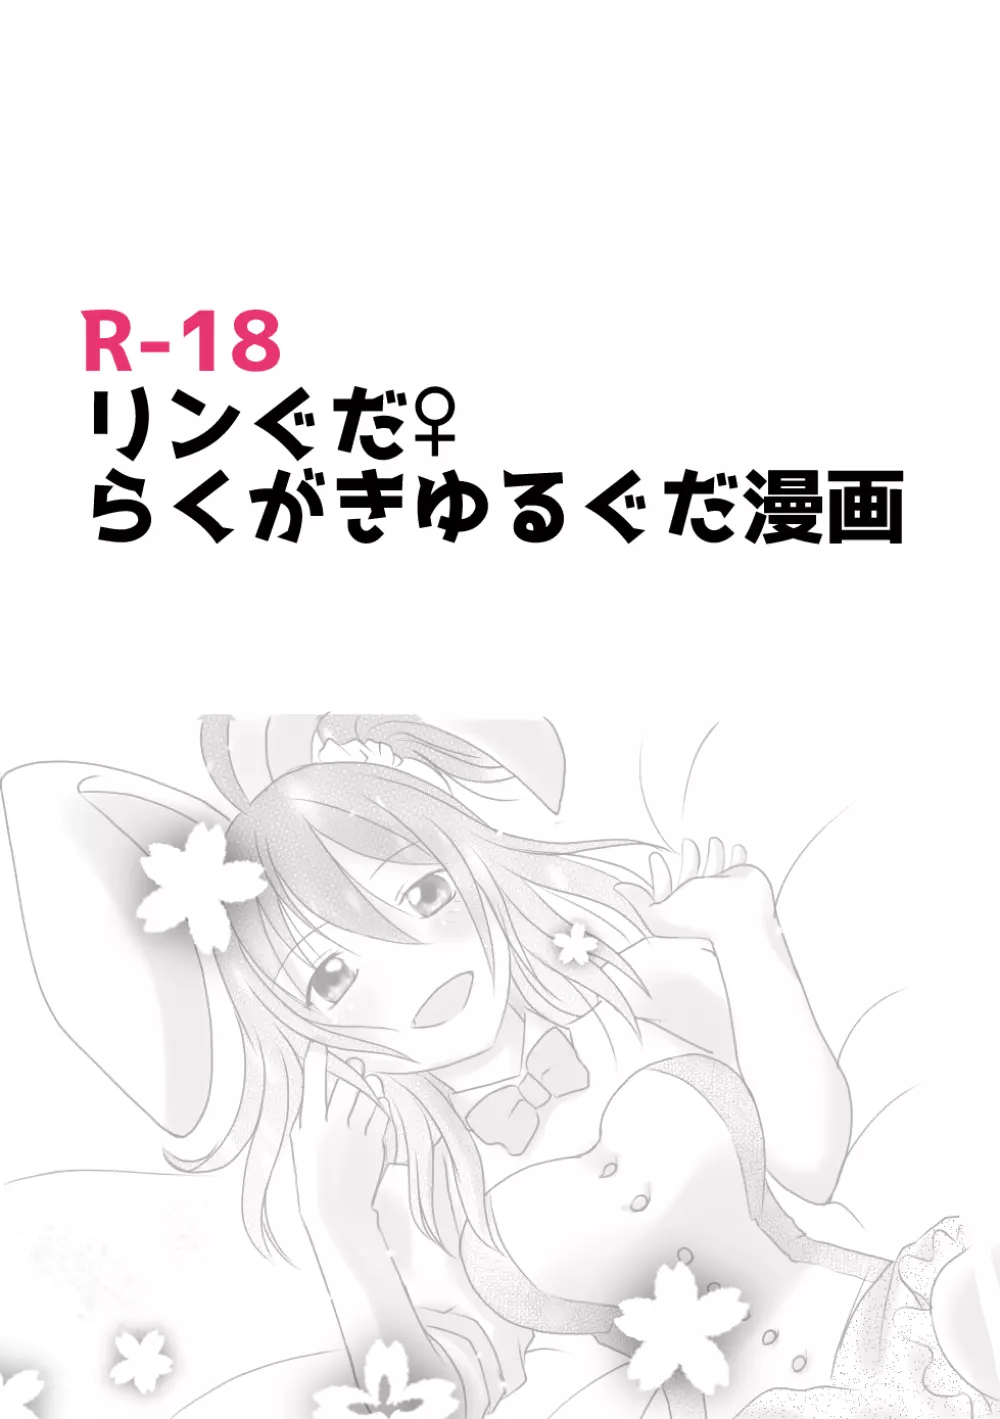 ] Rin guda ♀ rakugaki guda yuru manga(Fate/Grand Order]